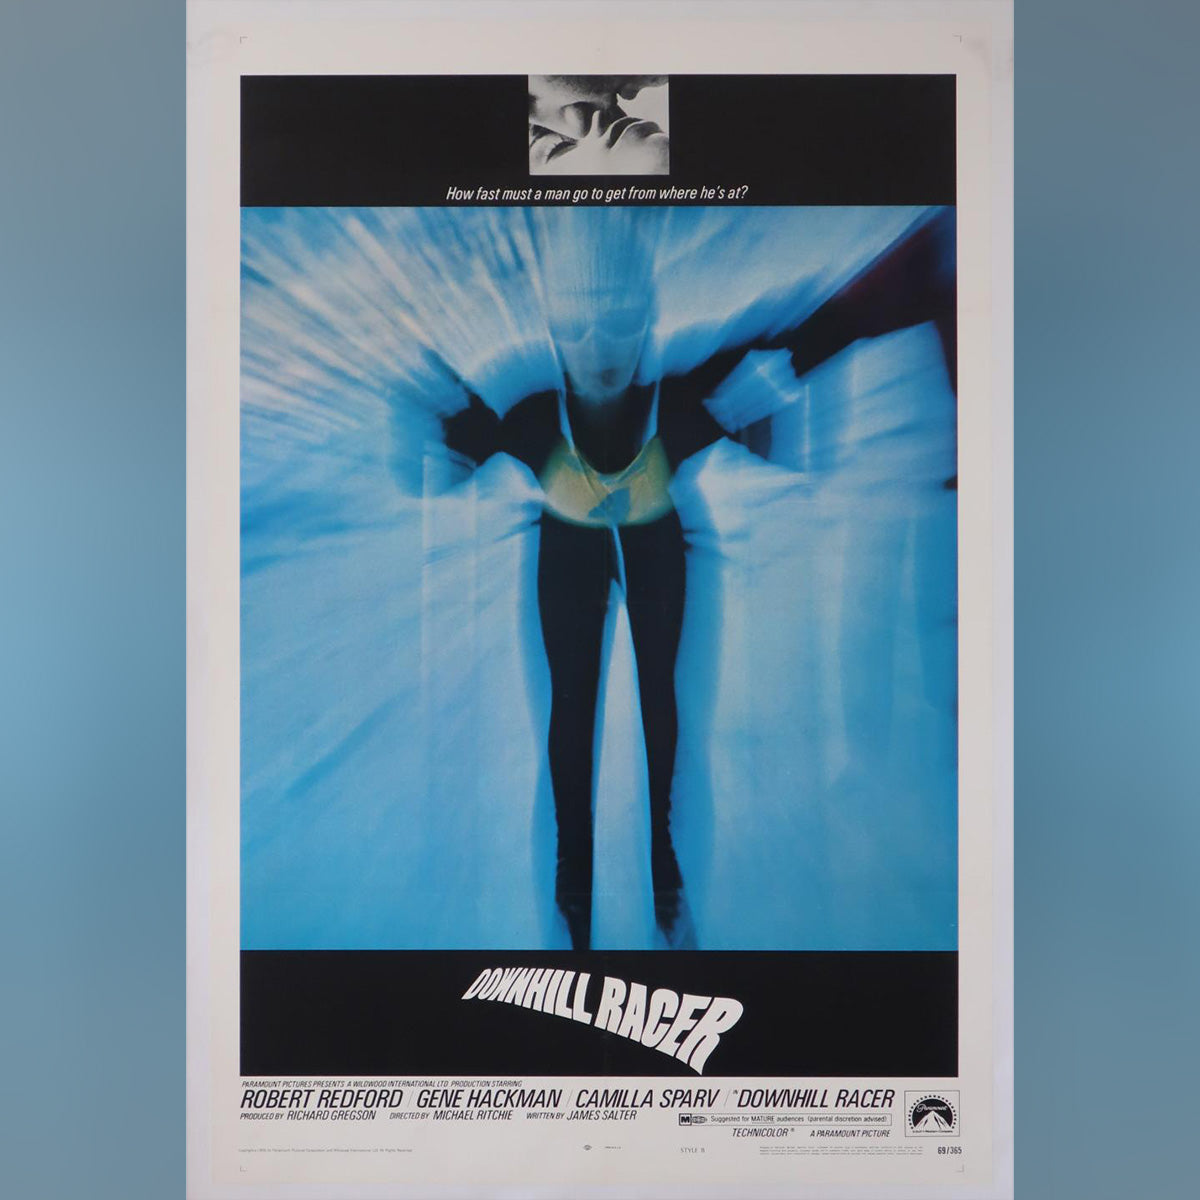 Original Movie Poster of Downhill Racer (1969)